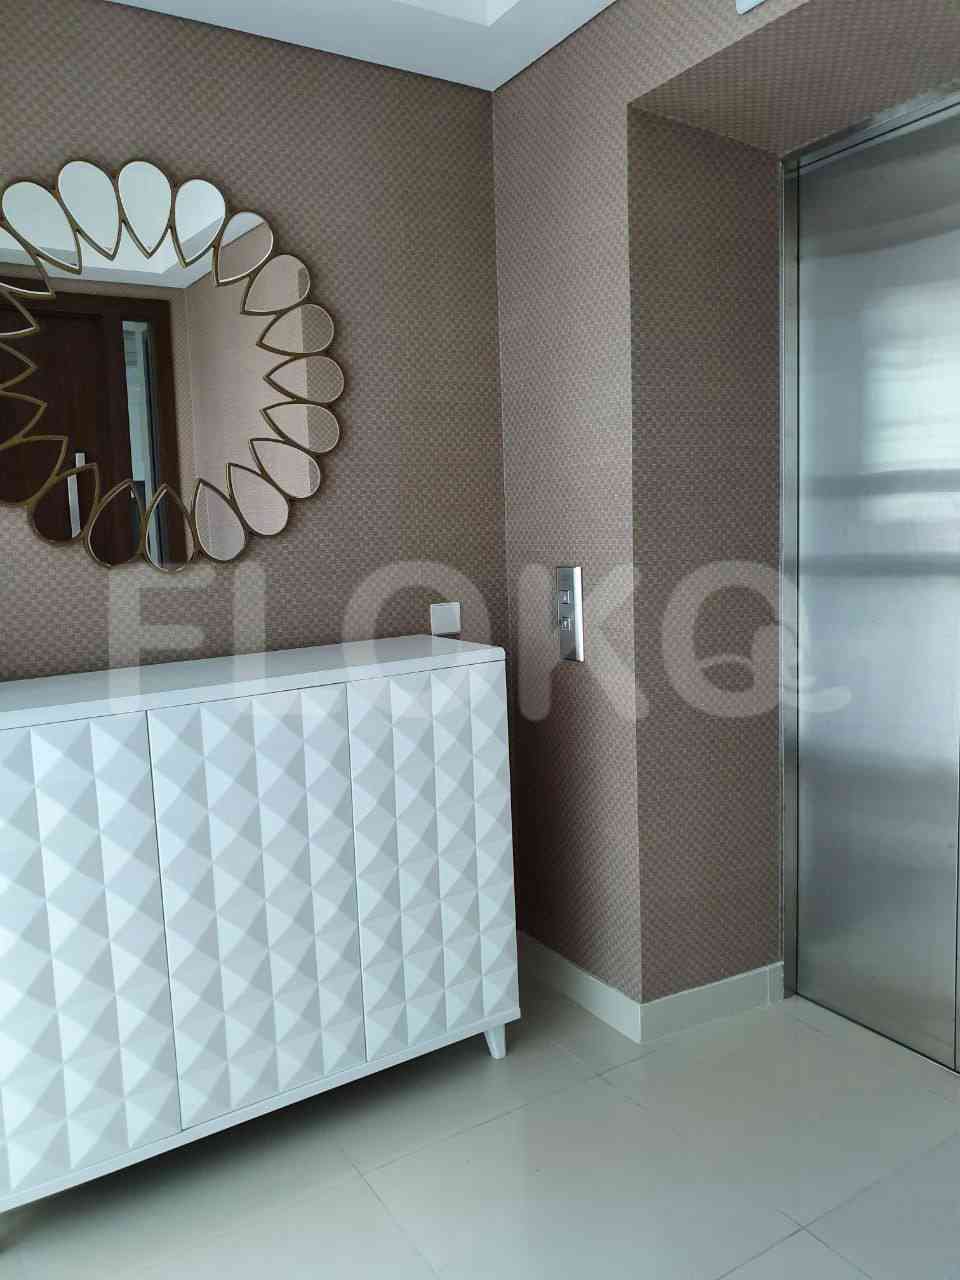 2 Bedroom on 16th Floor for Rent in Kemang Village Residence - fke113 10